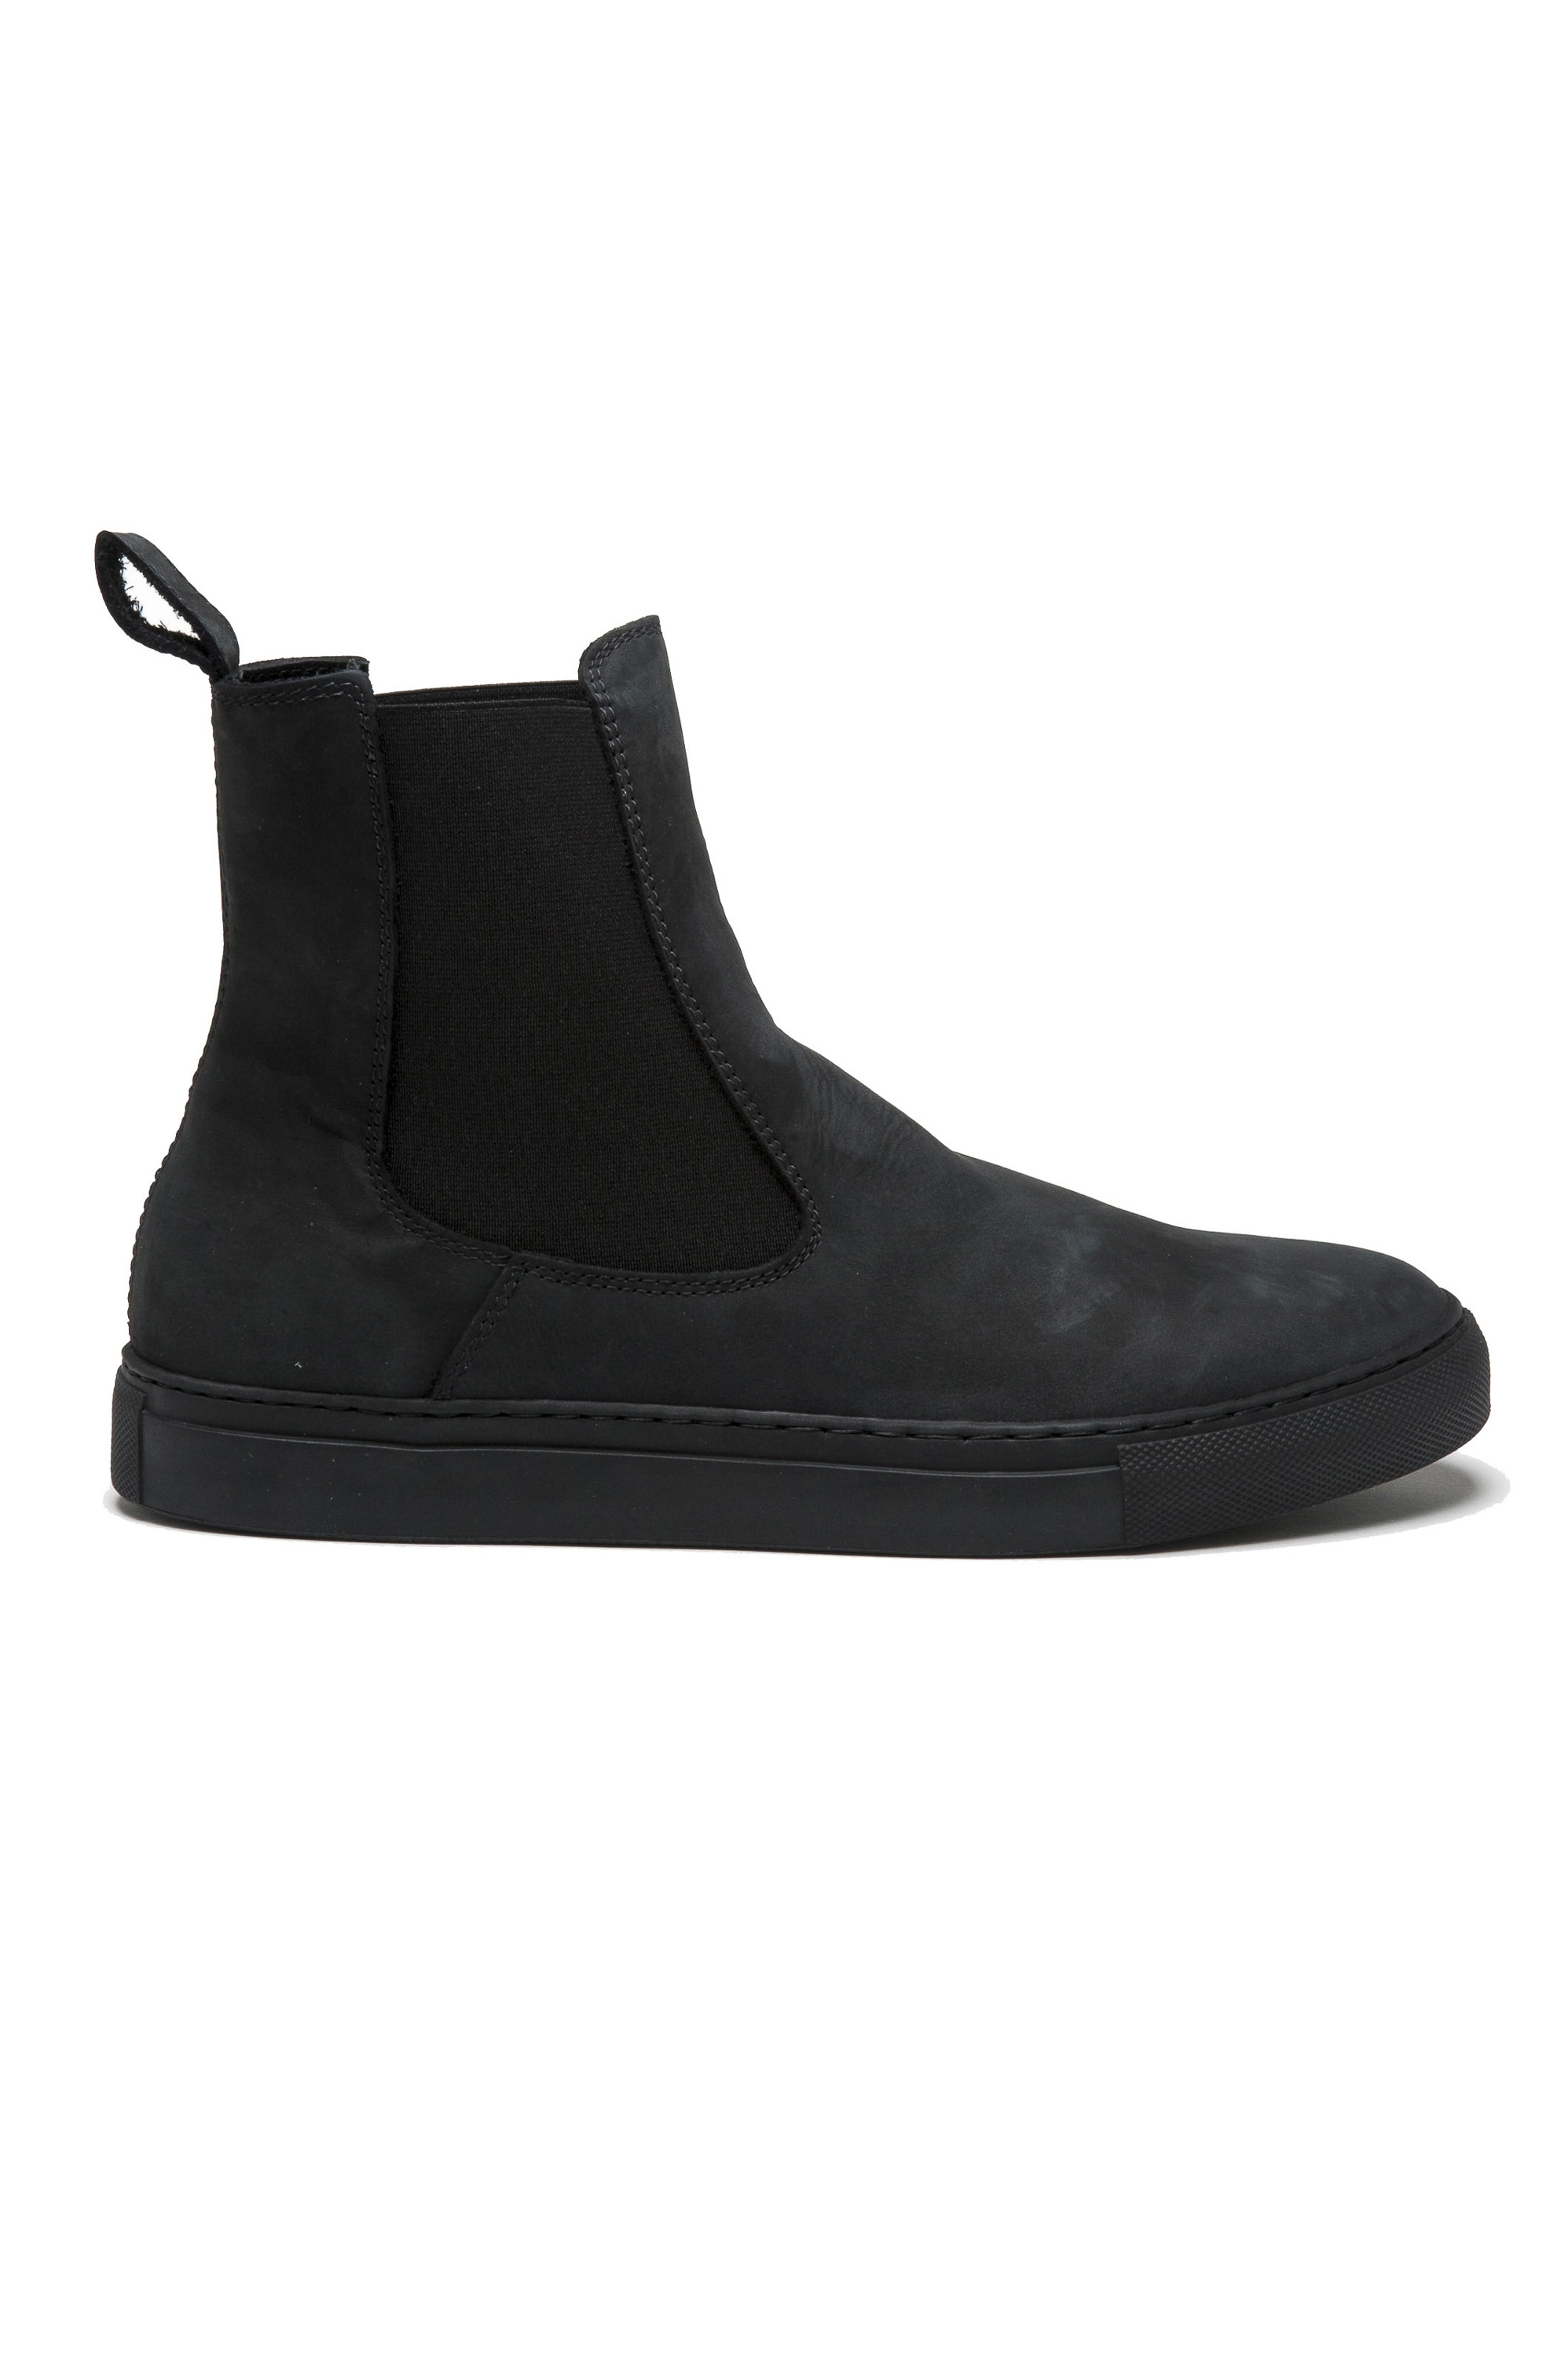 SBU 04665_23AW Classic elastic sided boots in grey nubuck calfskin leather 01